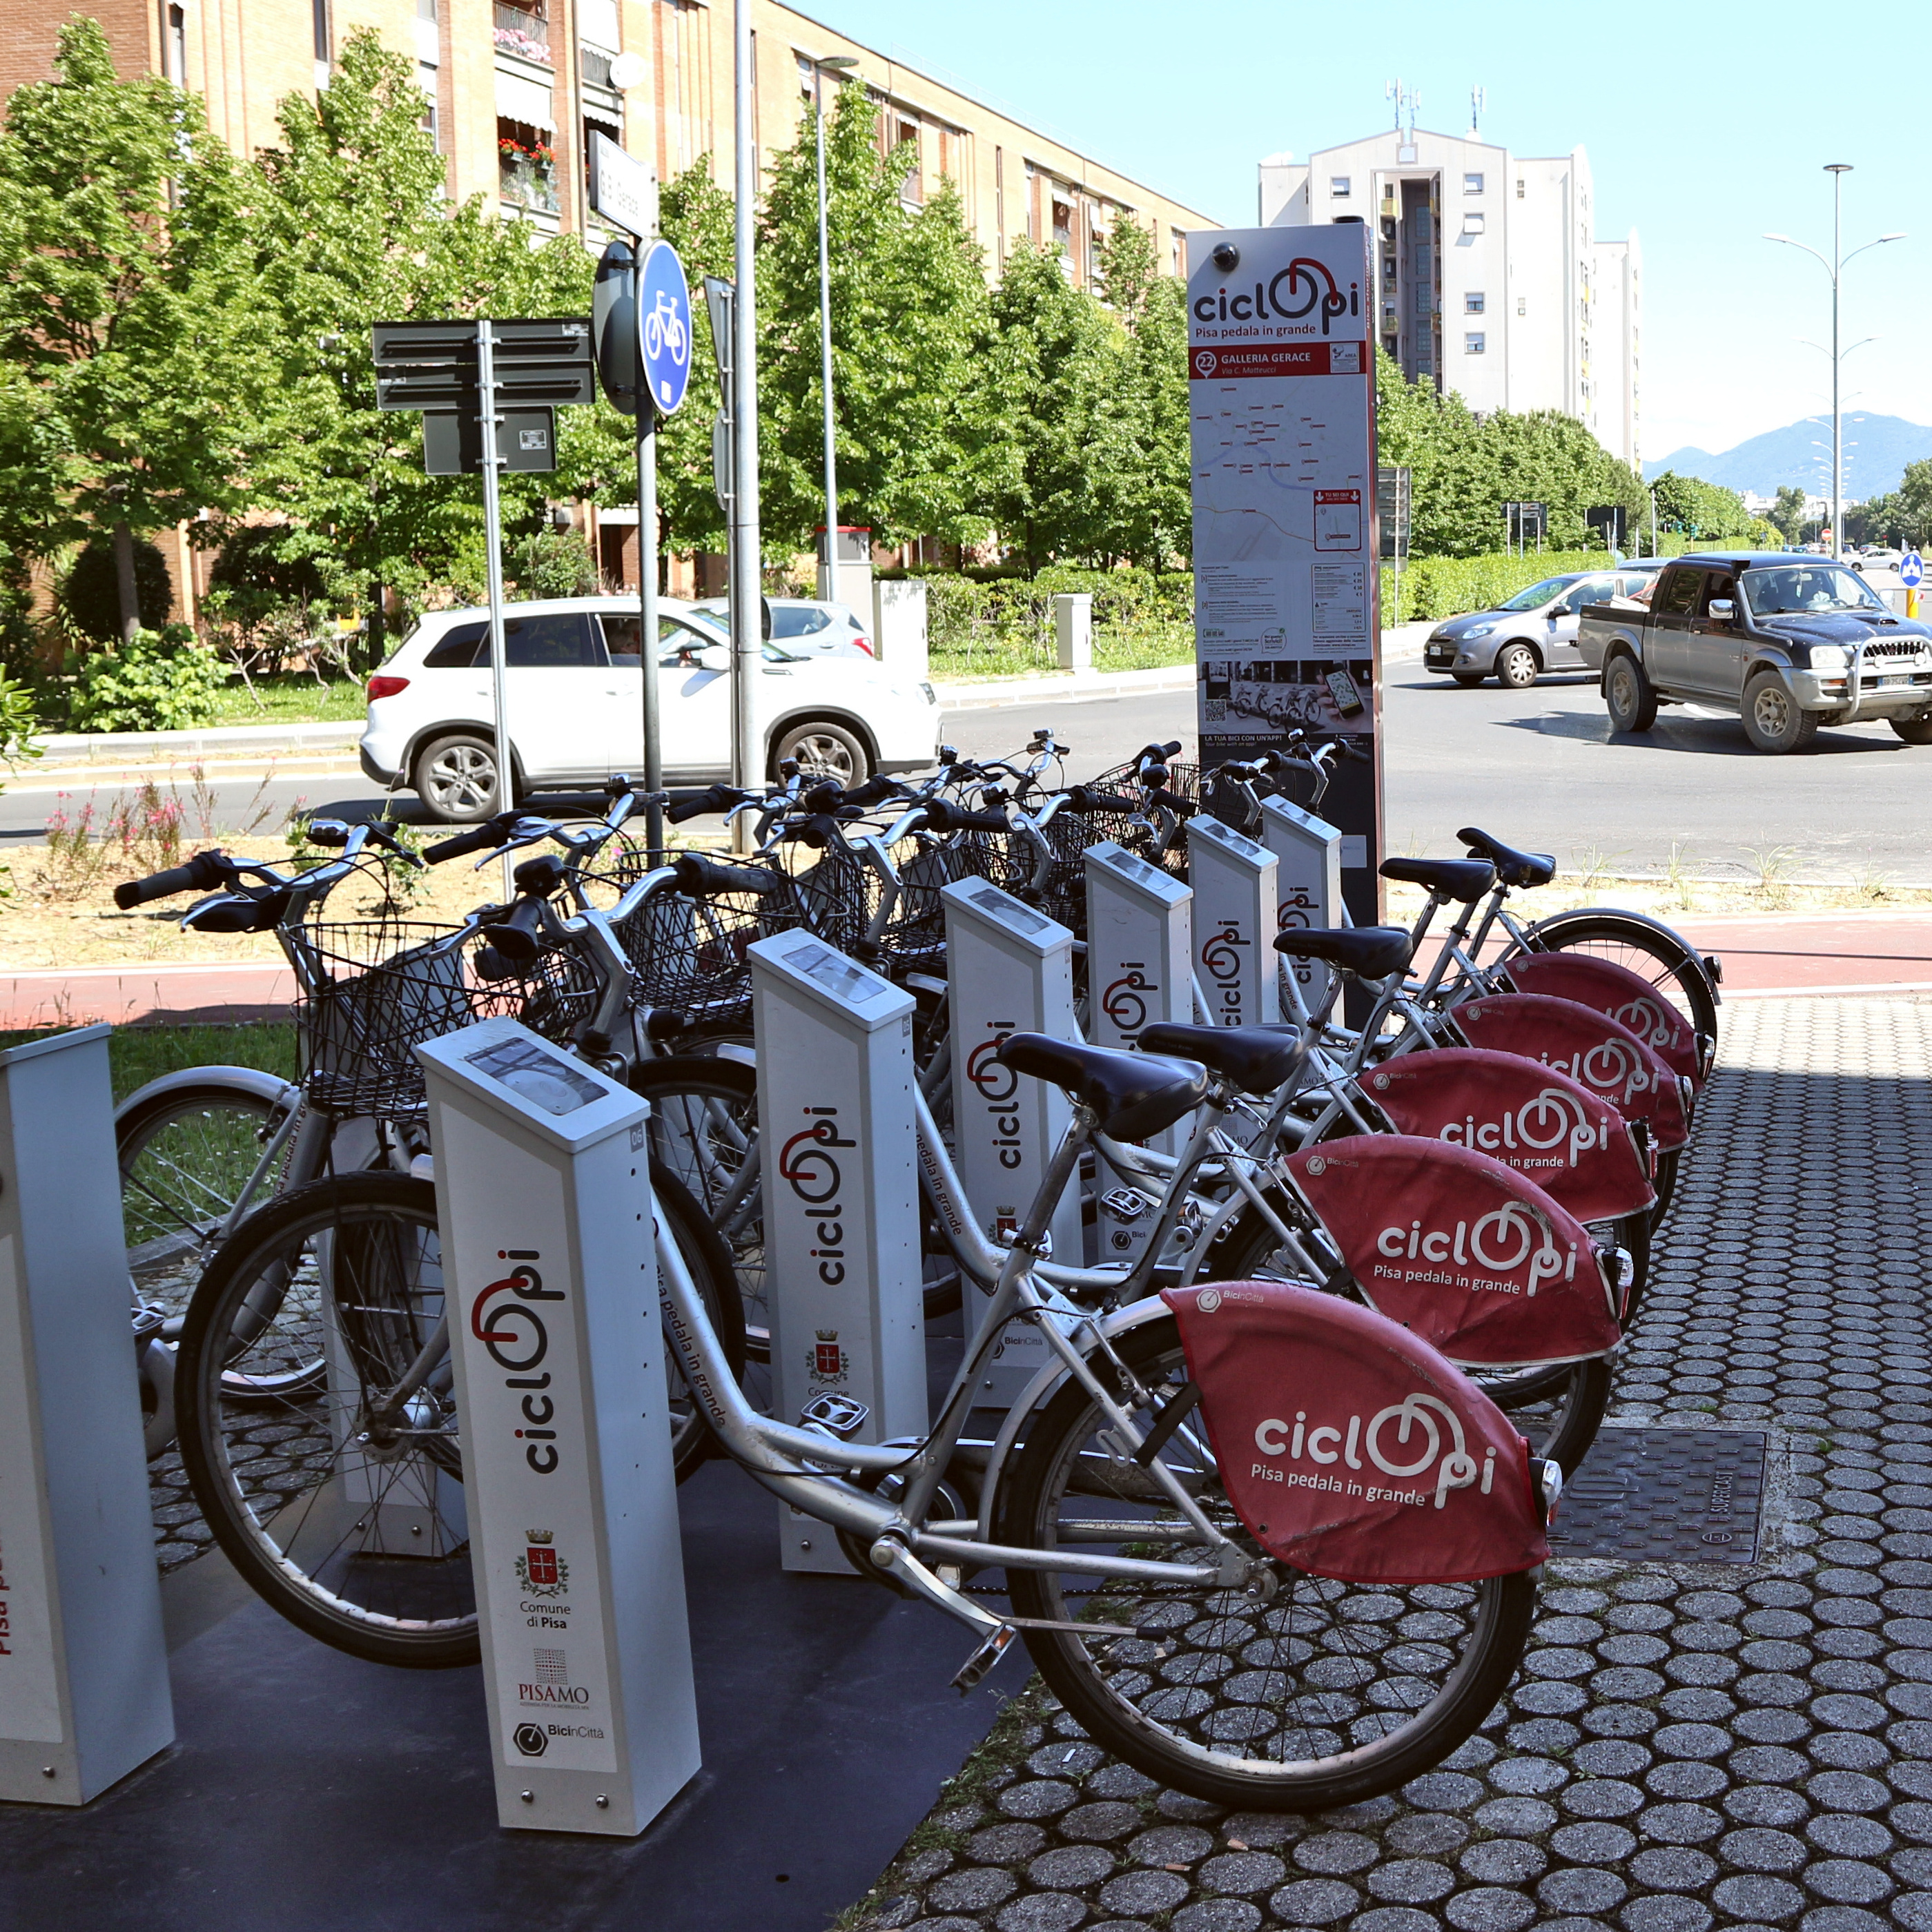 Pisa bike sharing system